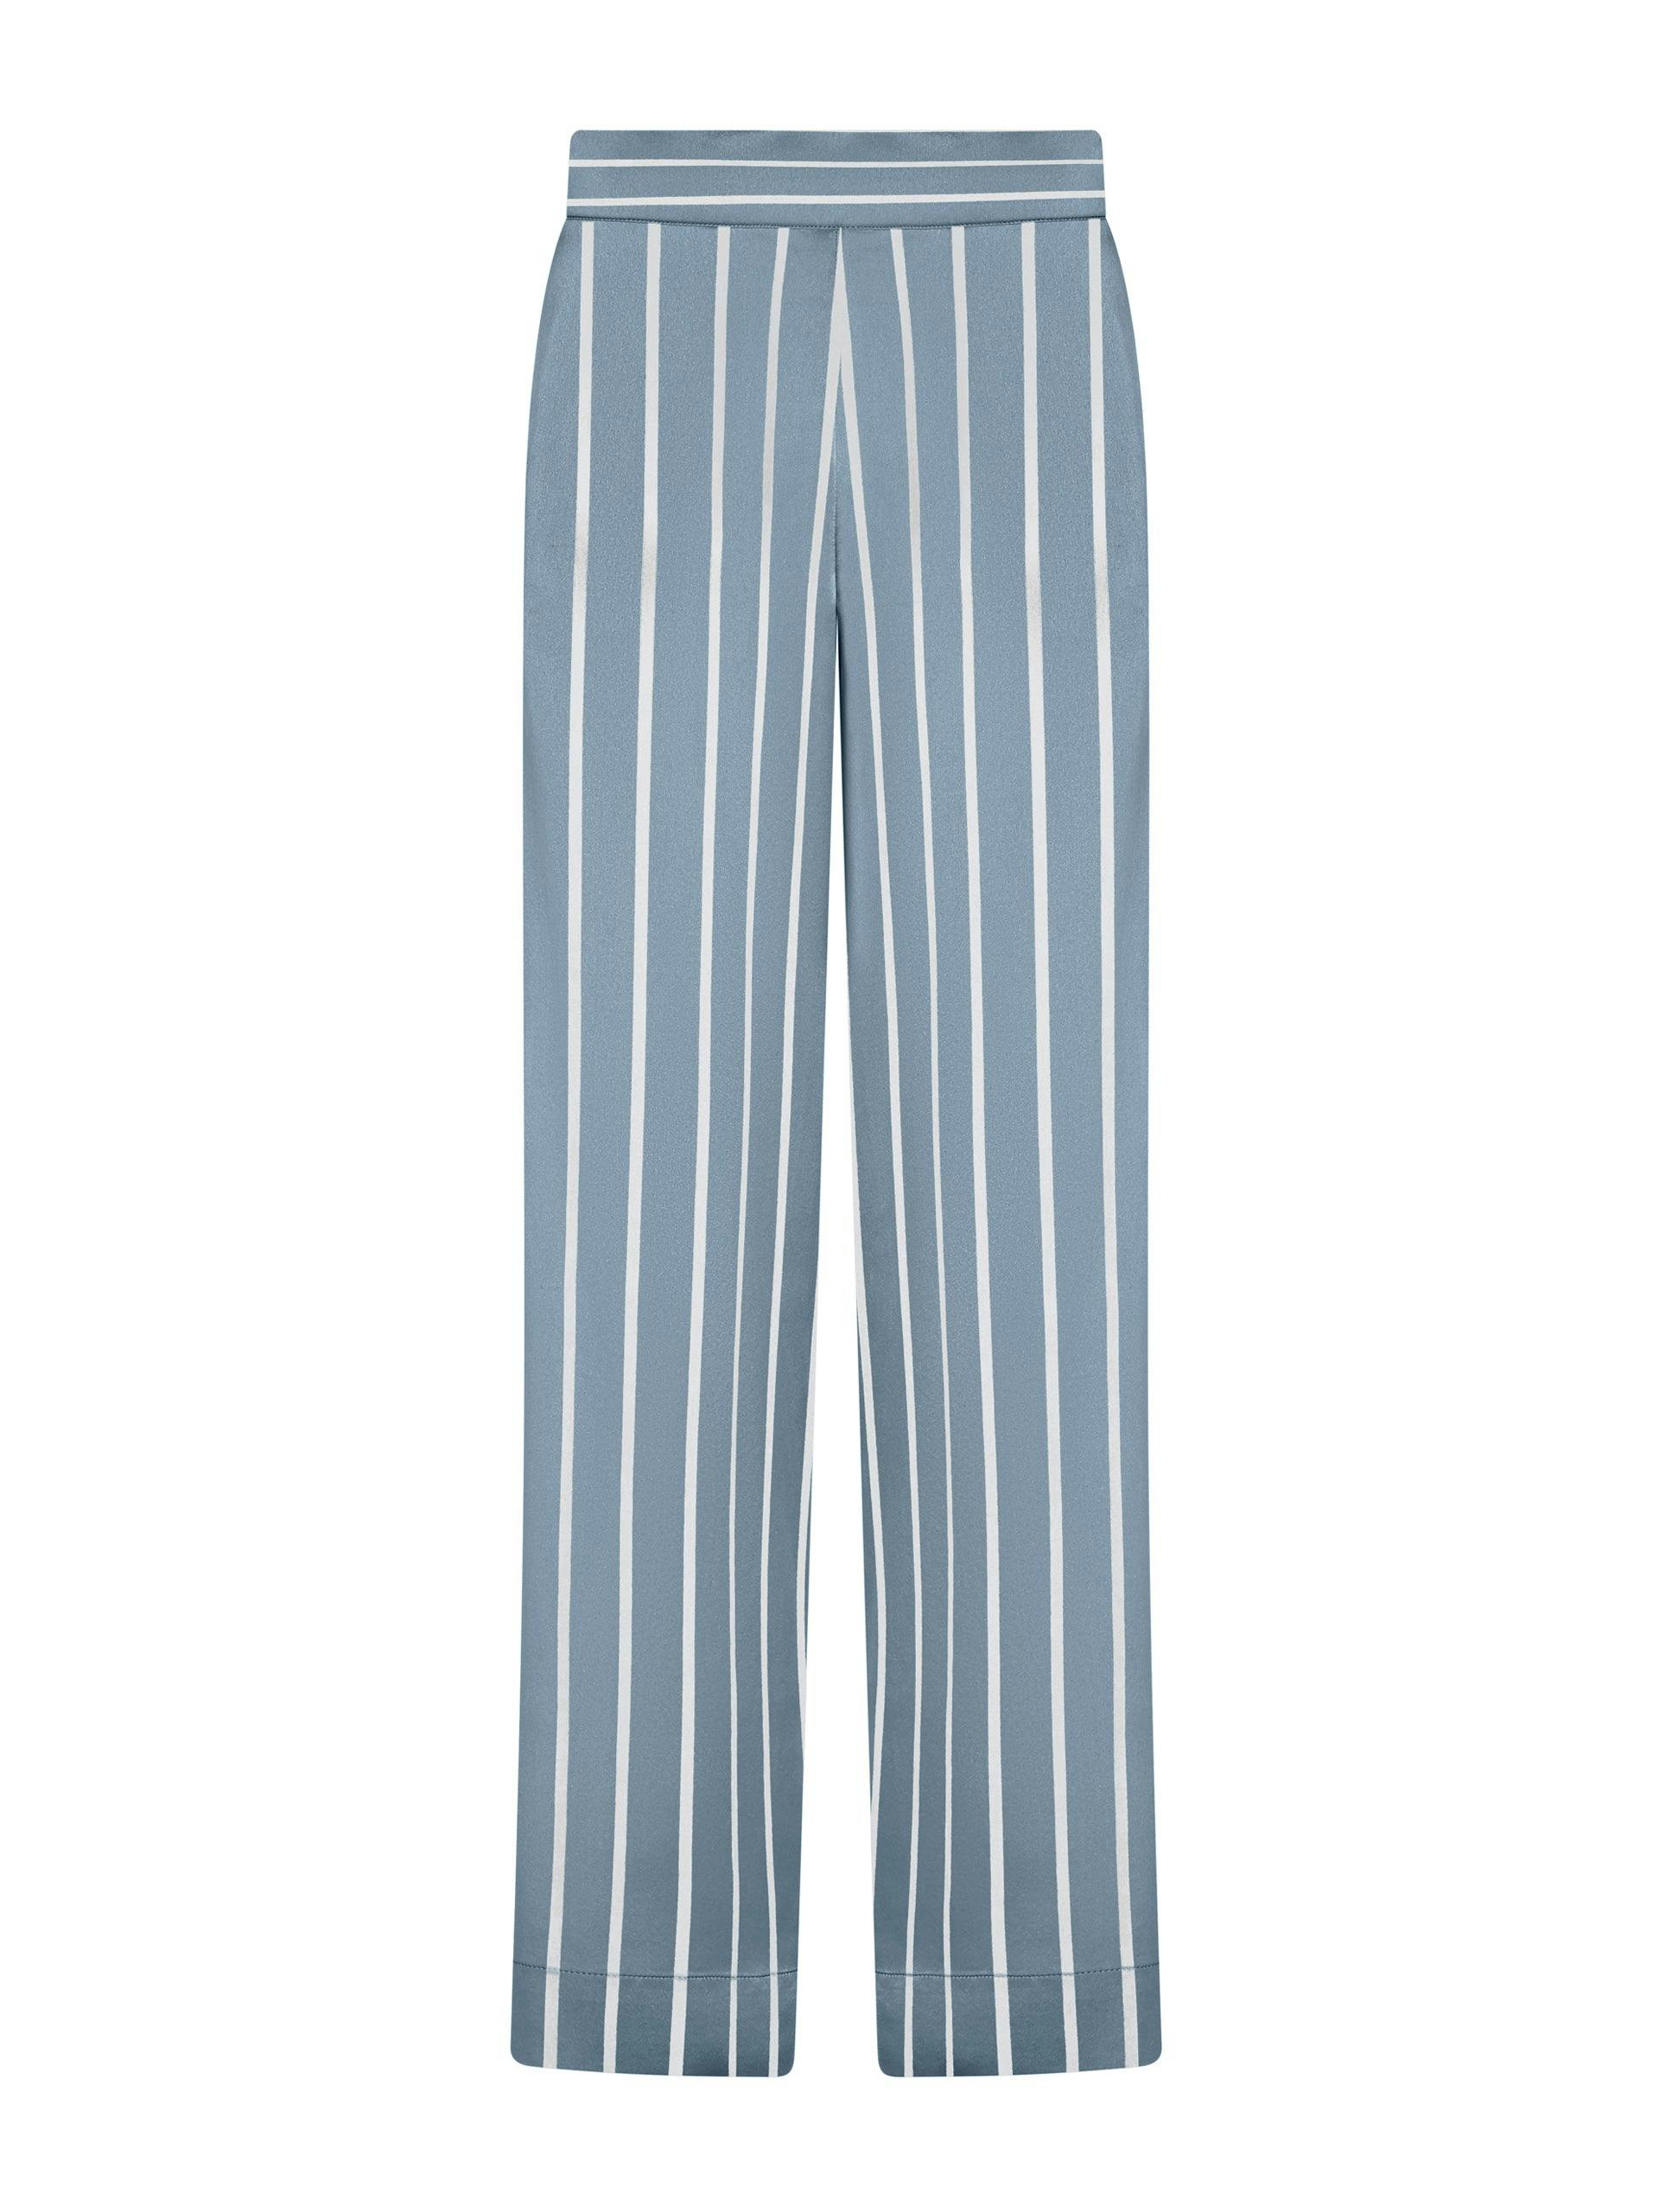 London dust blue striped silk pyjama bottoms